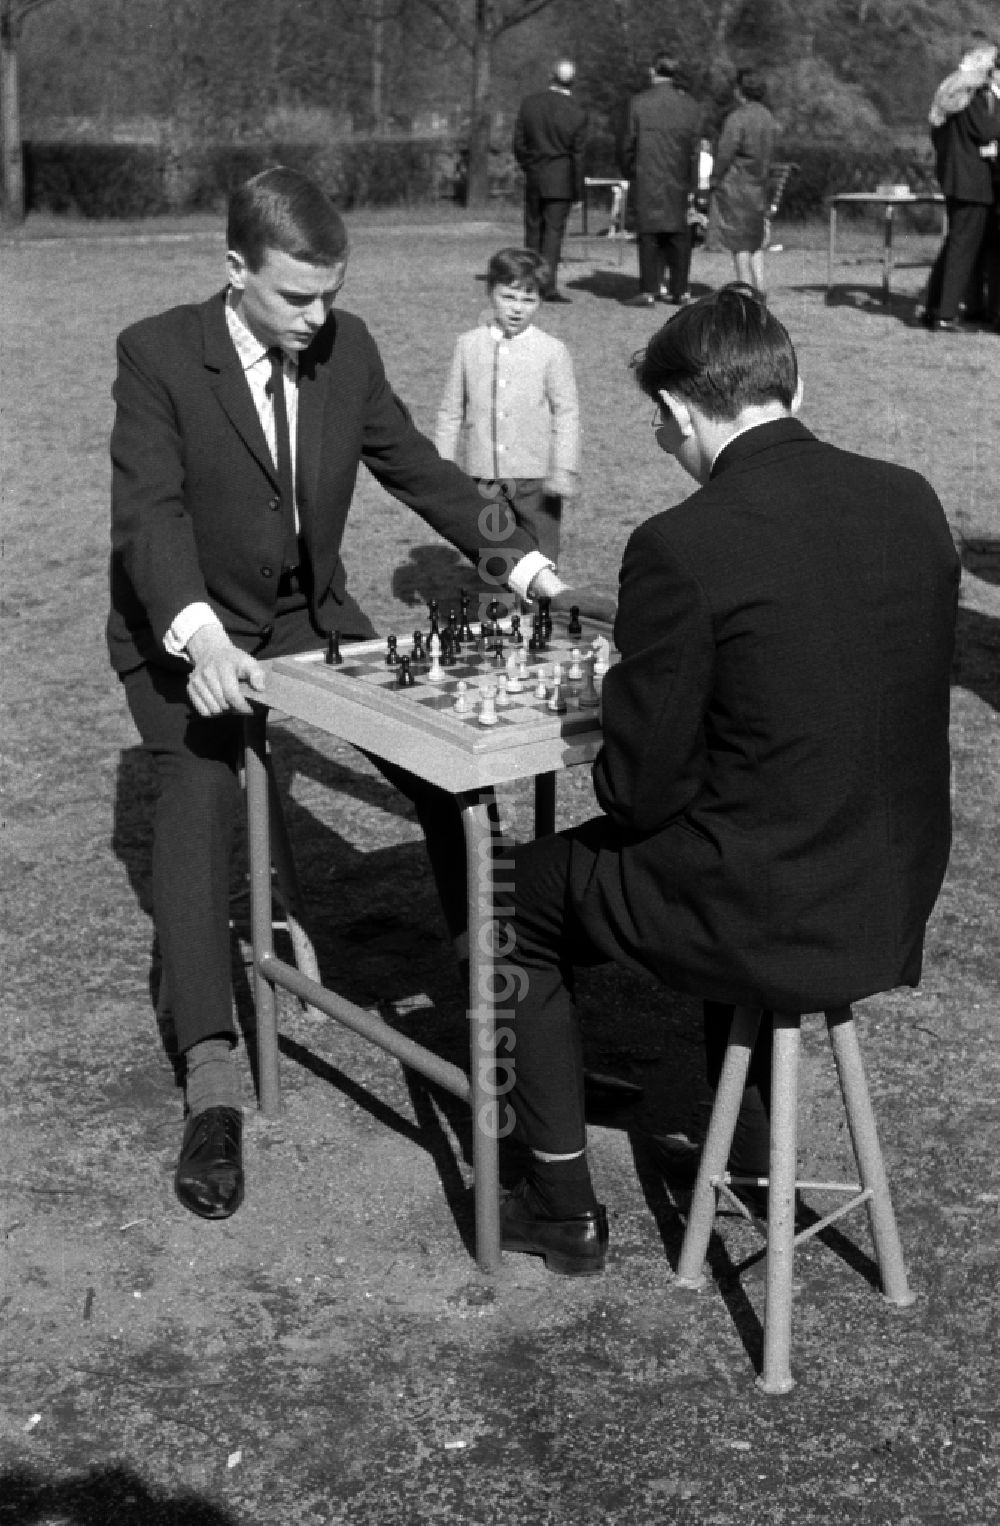 Berlin - Friedrichshain: Two men playing chess outdoors in Berlin - Friedrichshain